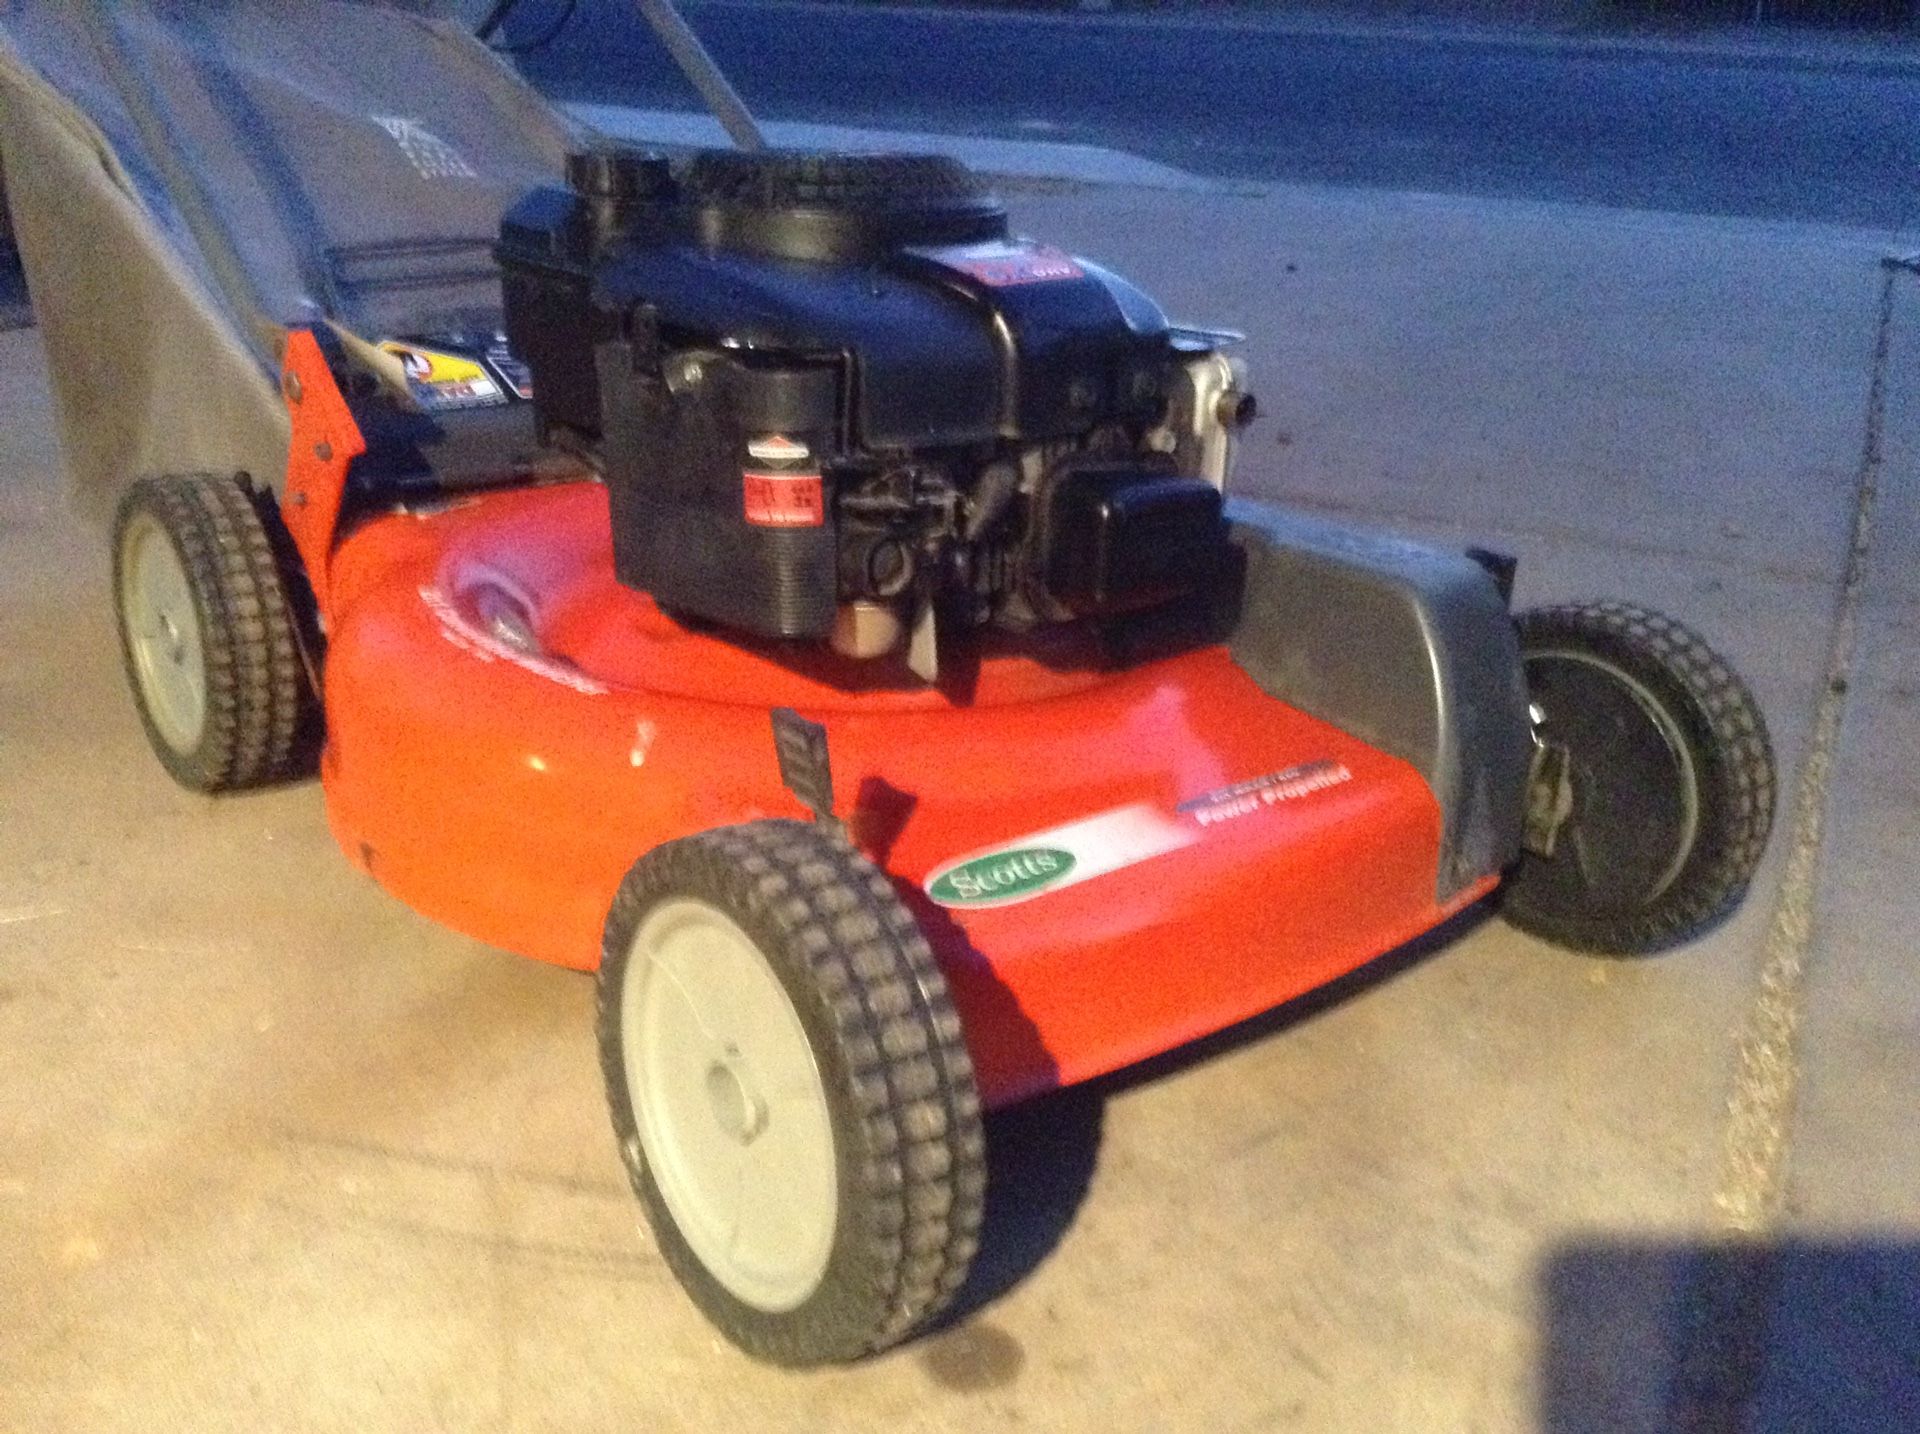 Scotts 6hp self propelled lawn mower